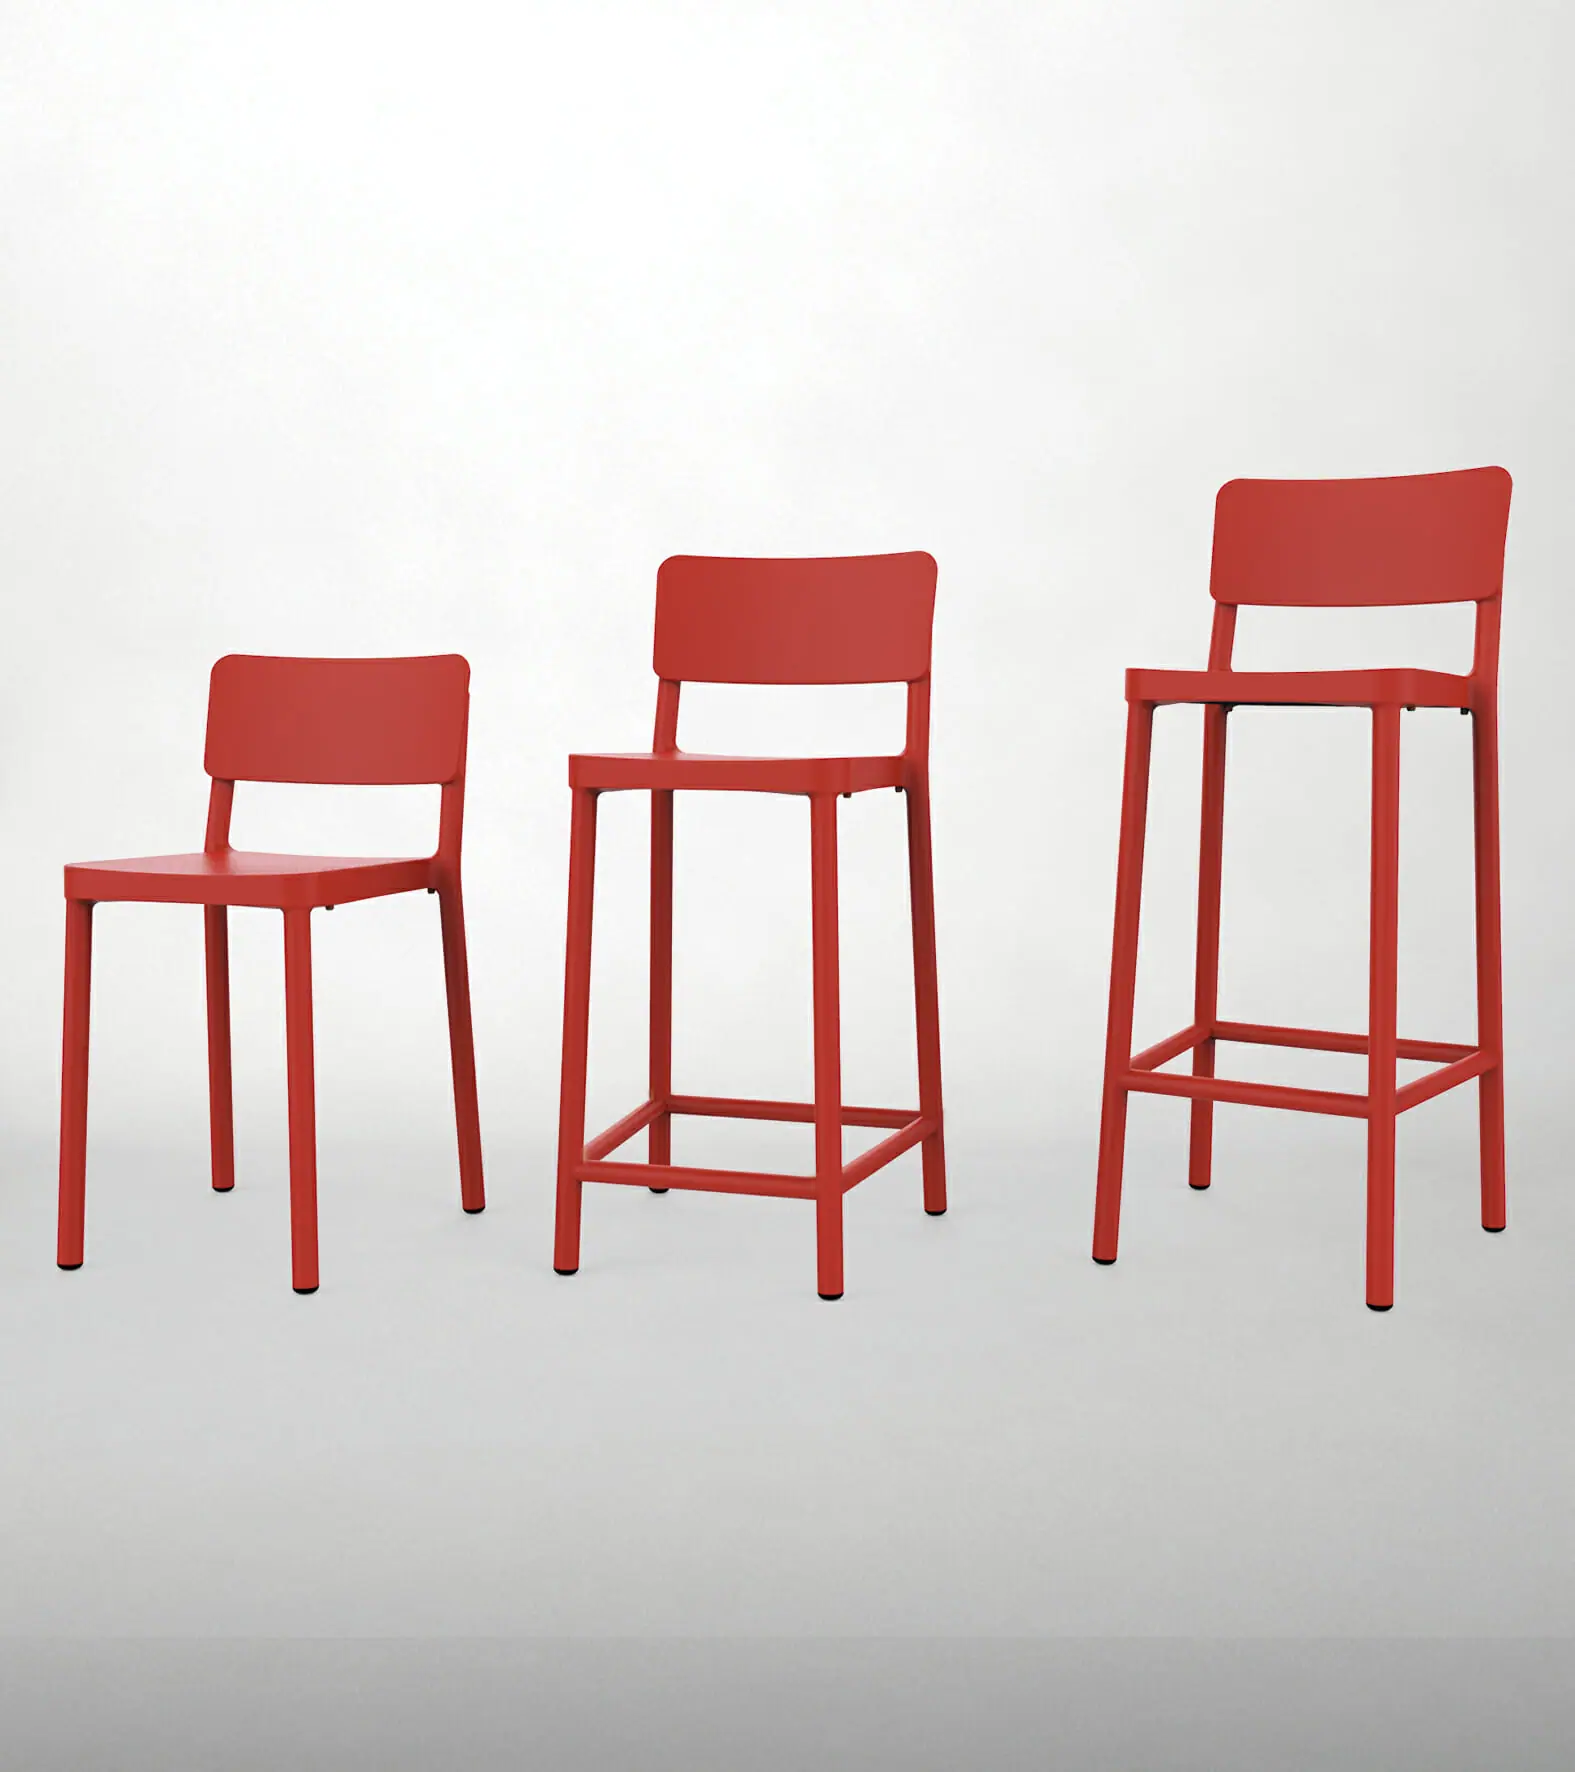 20242-20240-lisboa-chairs